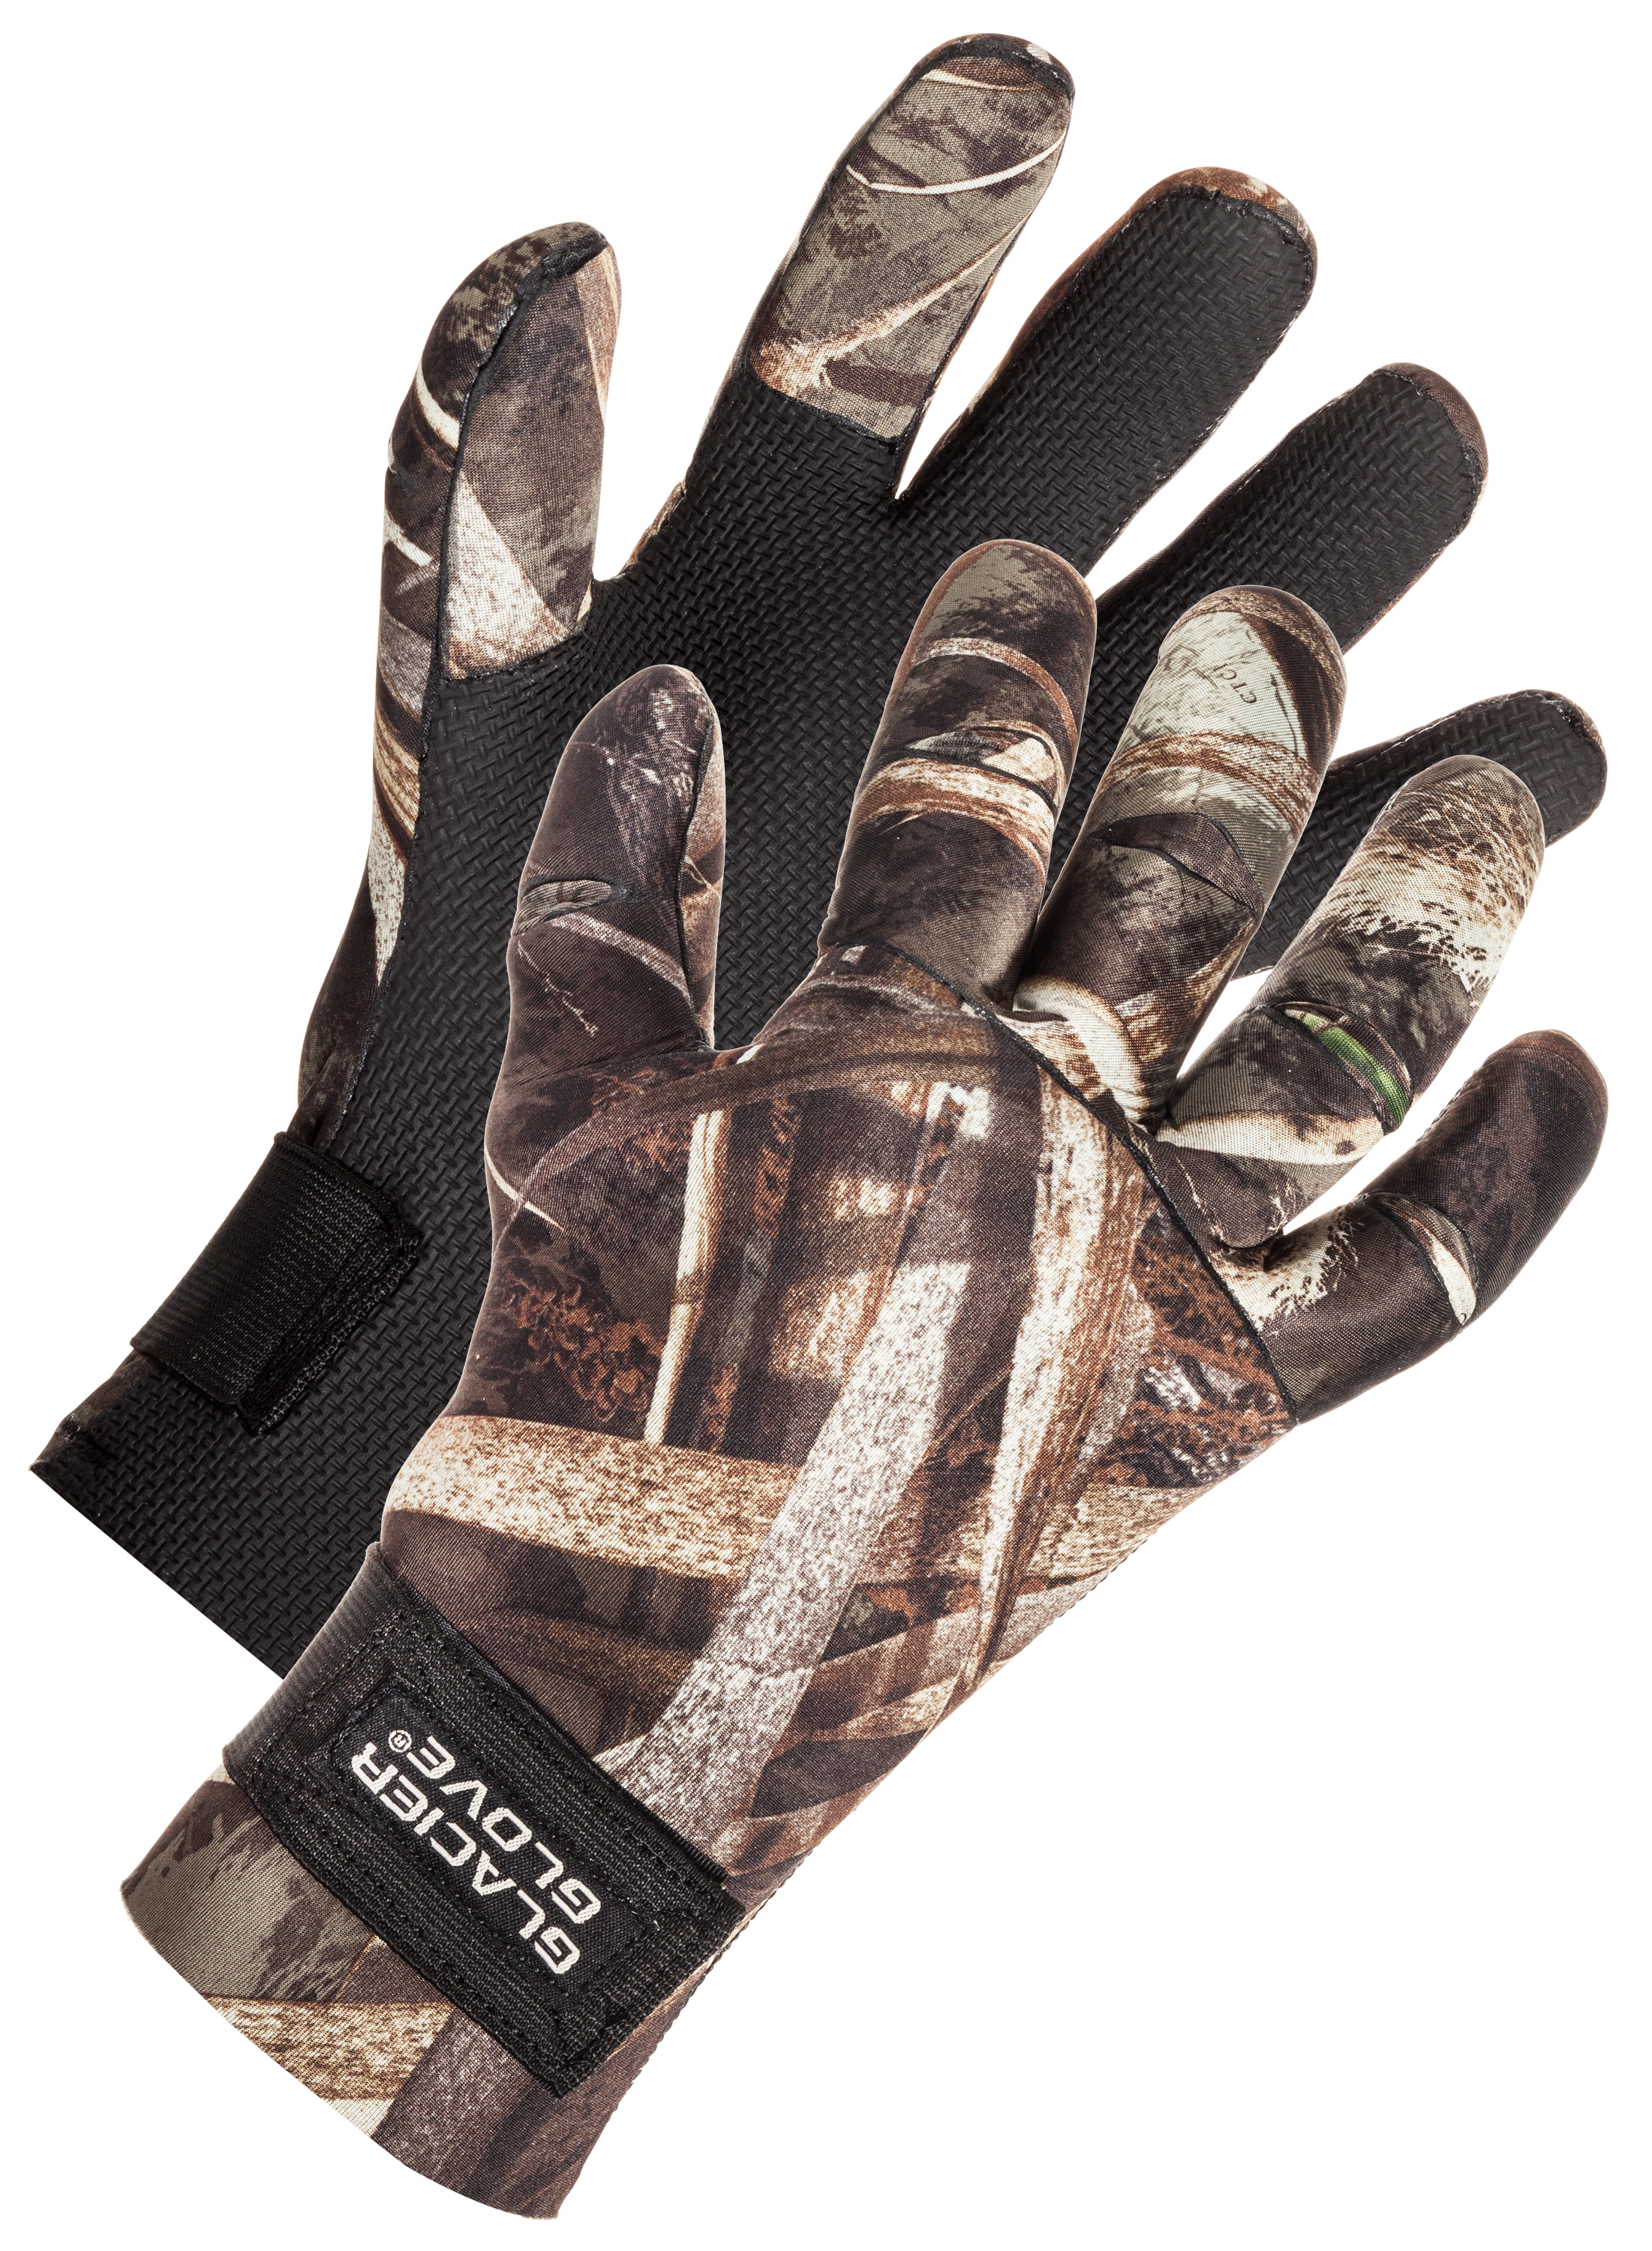 Glacier Glove Bristol Bay Full Finger Waterproof Gloves - Black